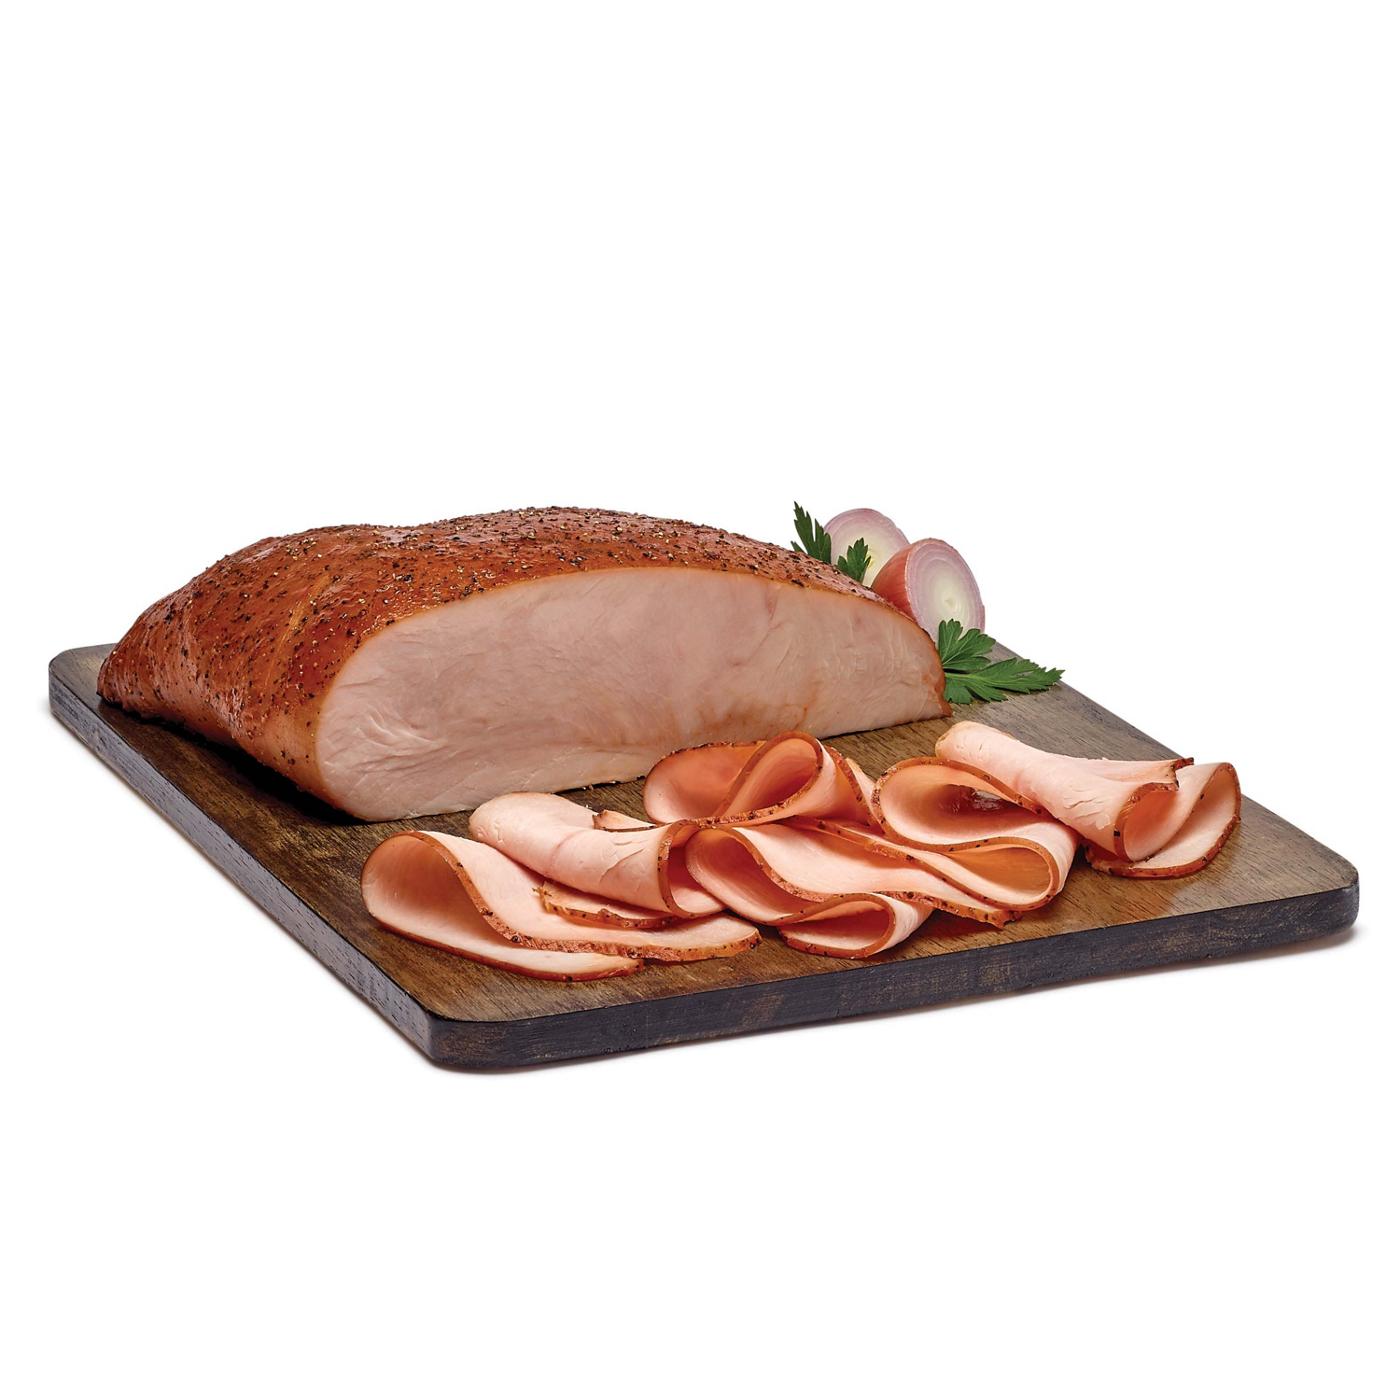 H-E-B Deli Sliced Post Oak-Smoked & Seasoned Turkey Breast; image 1 of 2